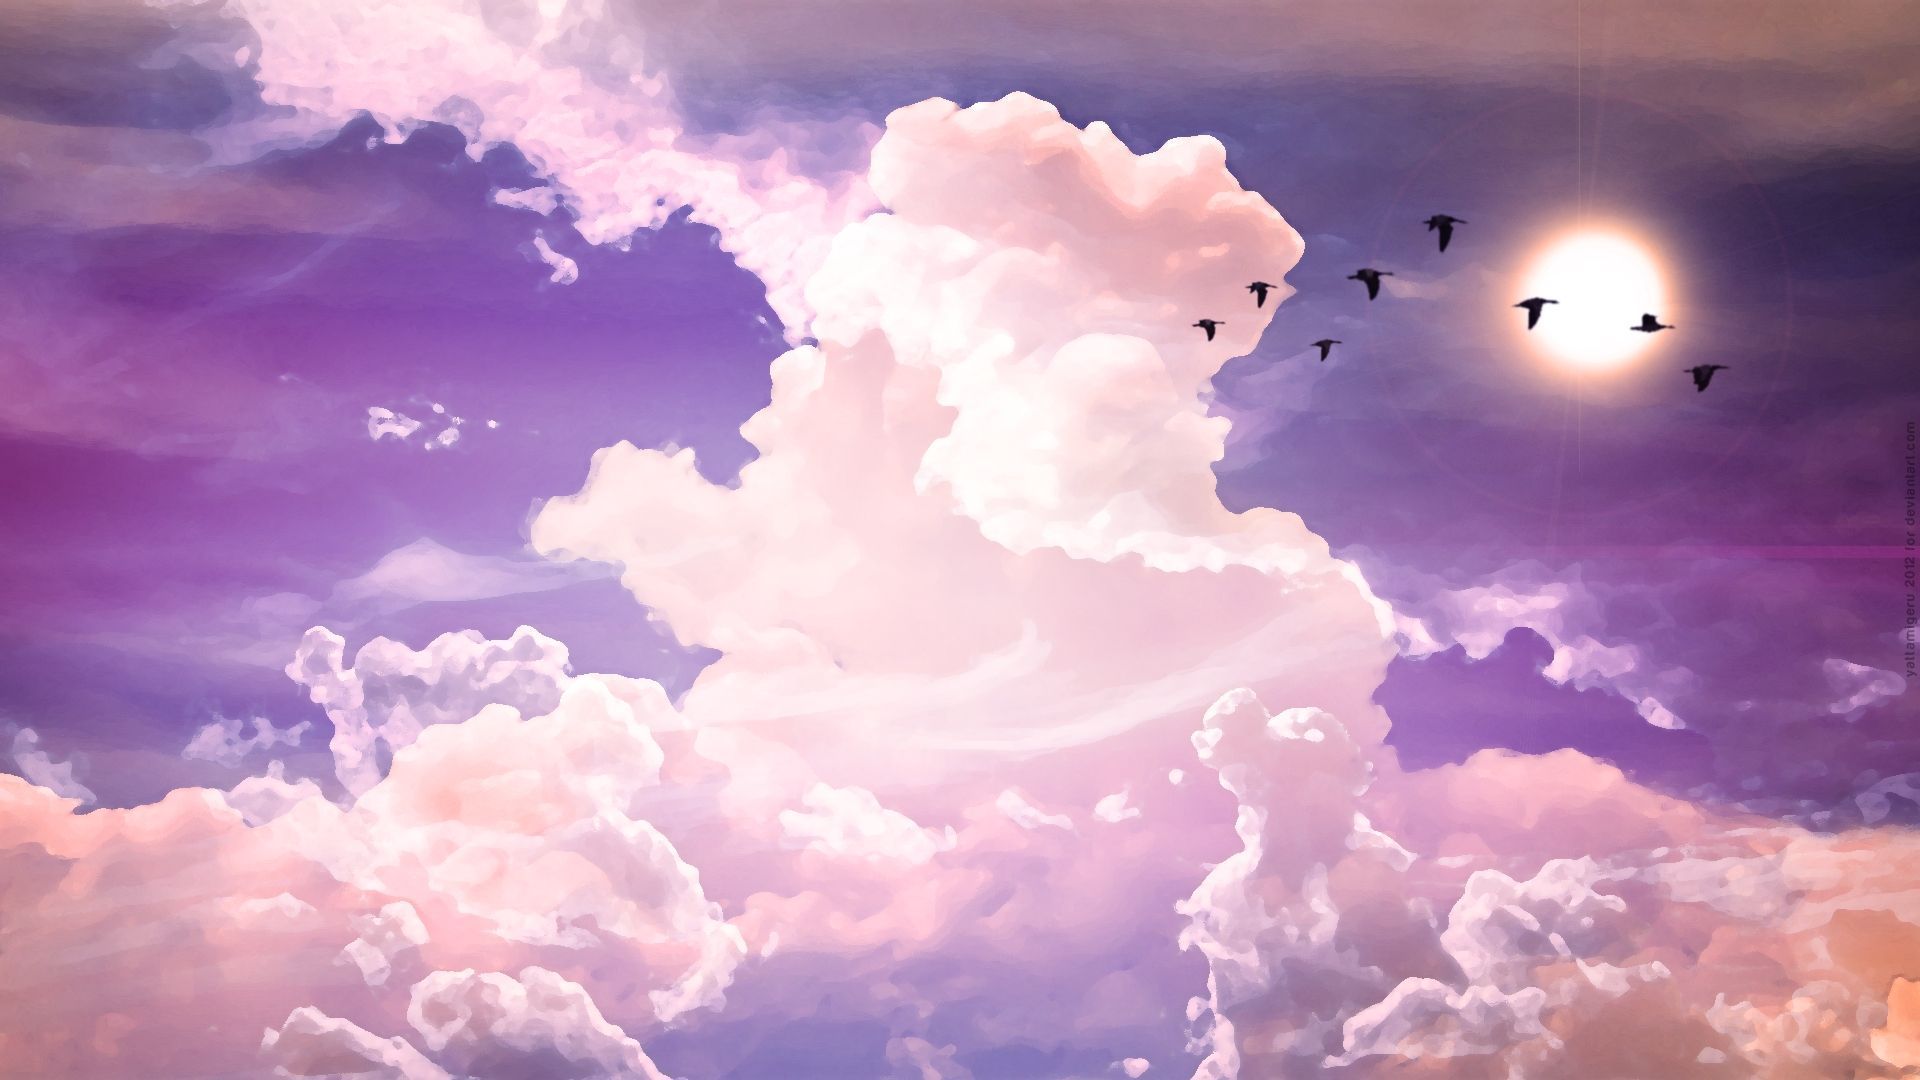 A flock of birds flying in the sky - Sky, cloud, sunshine, pastel purple